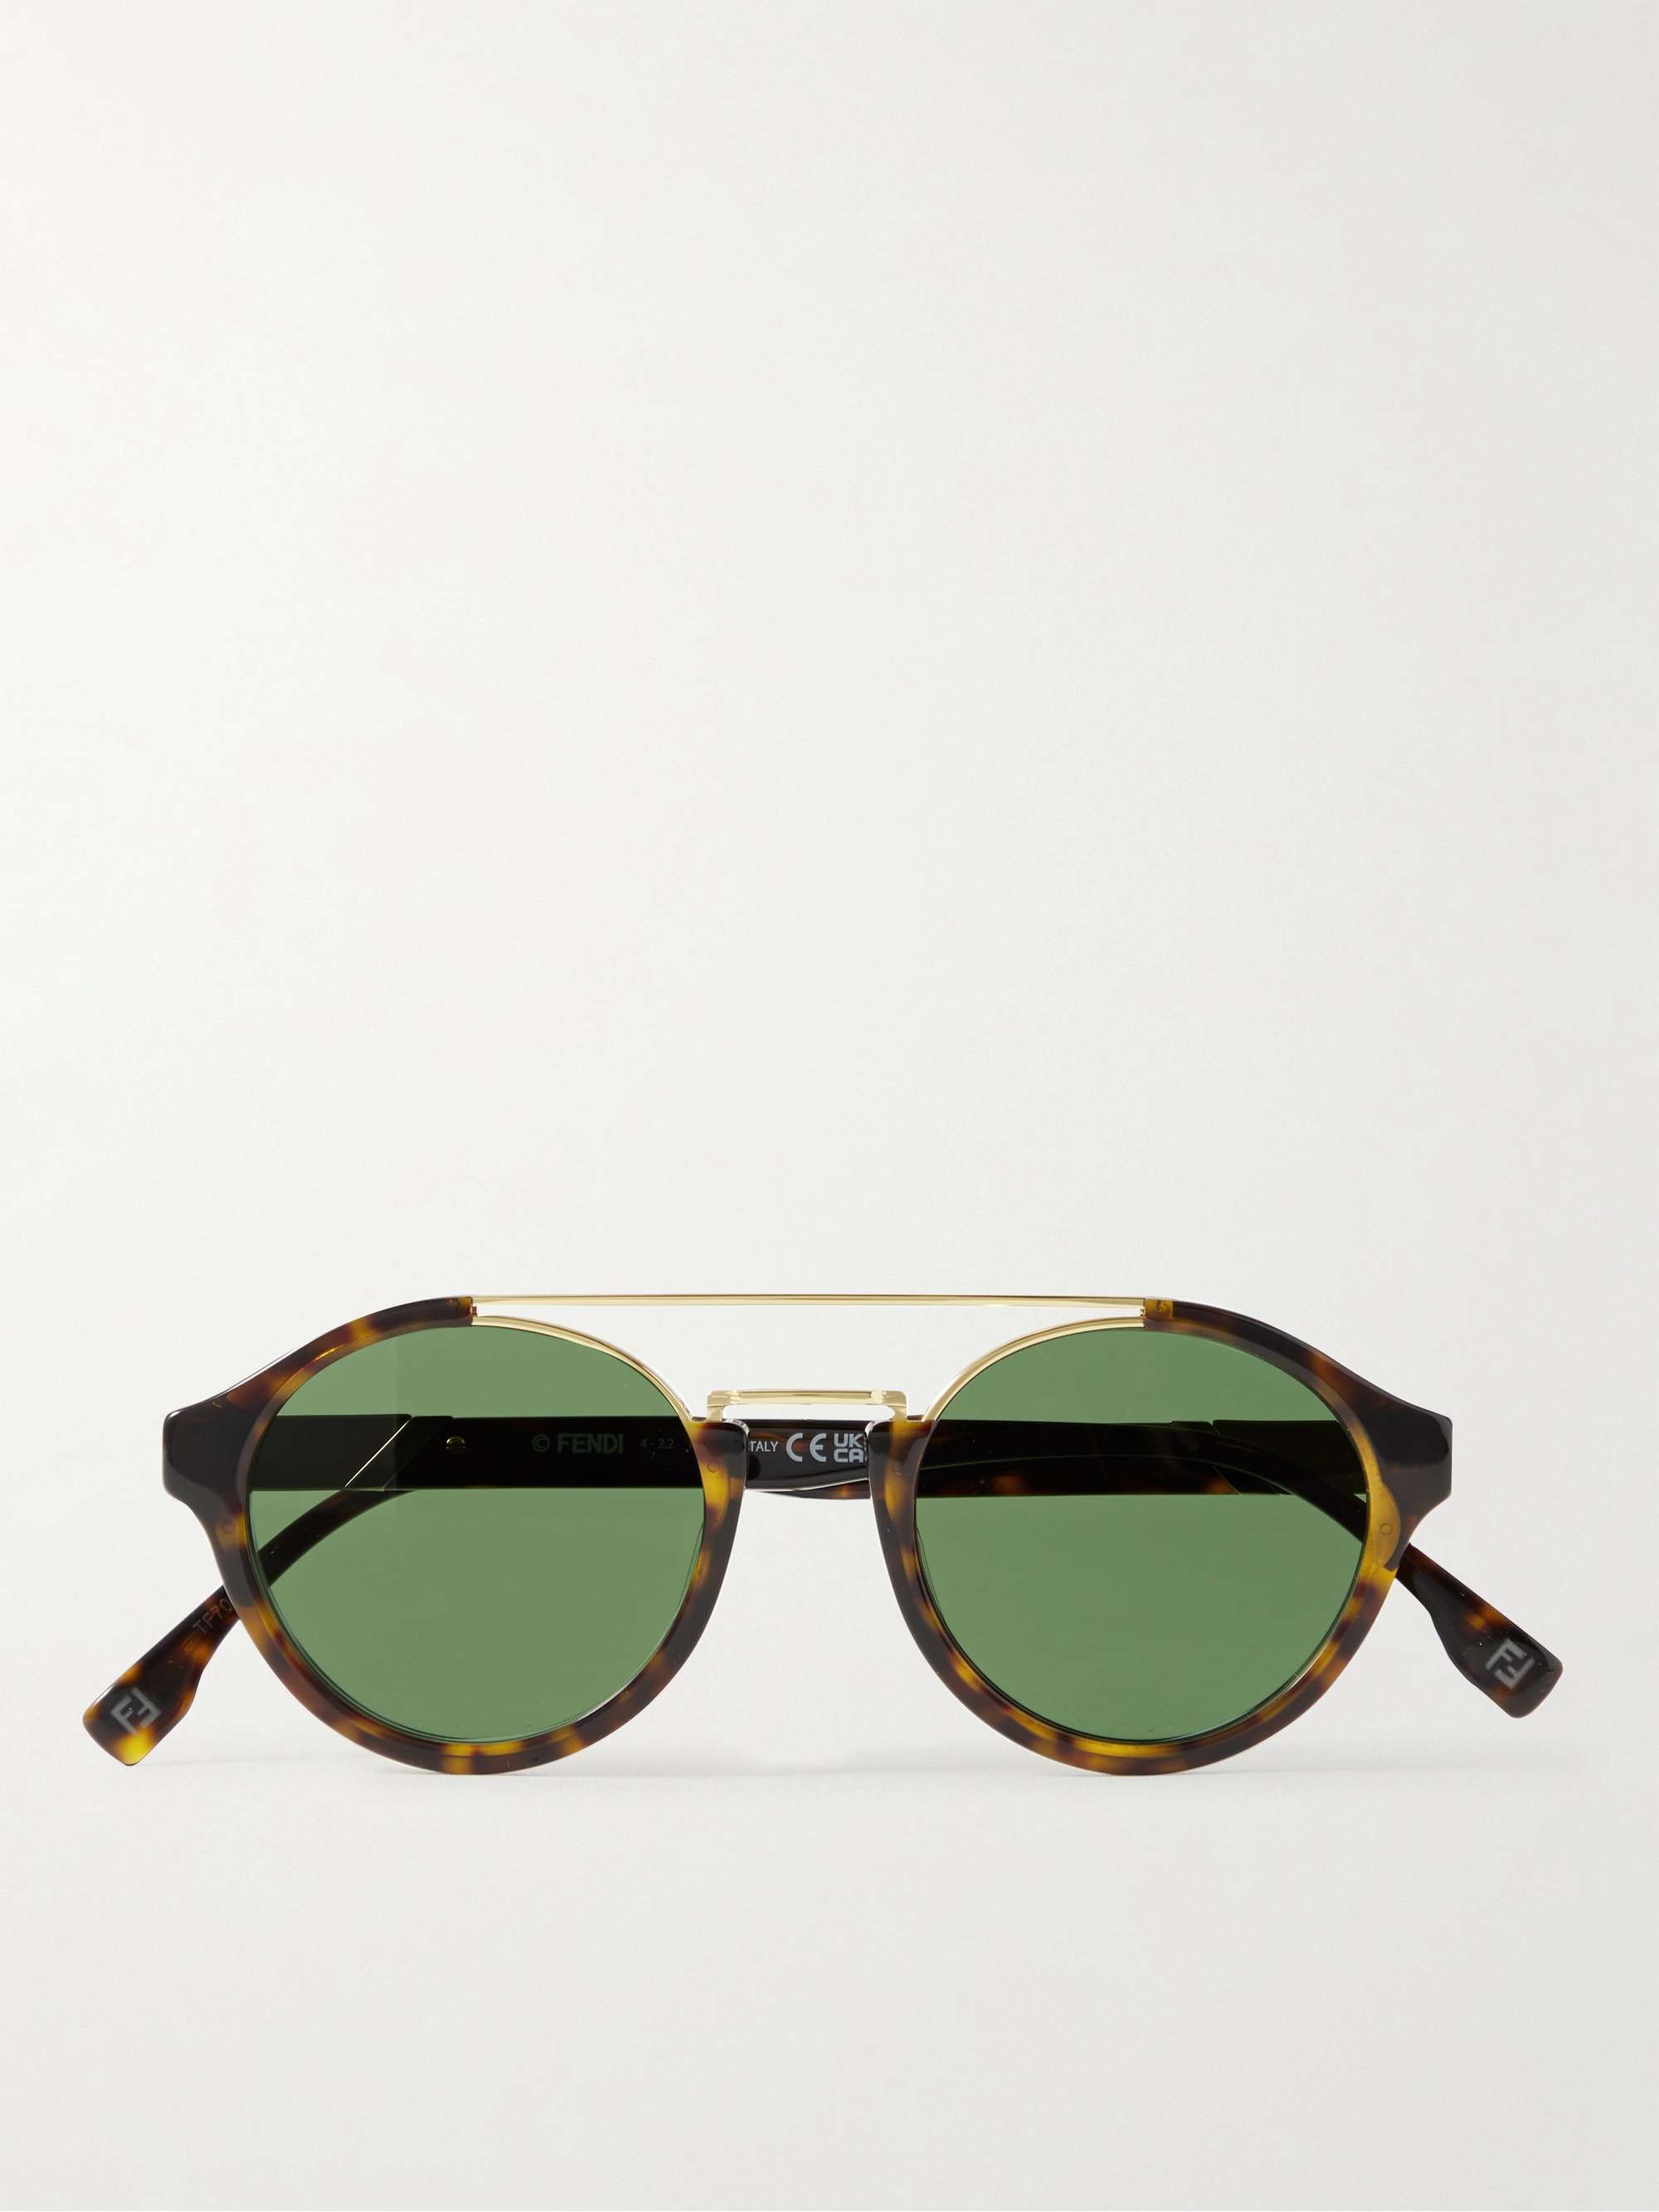 Round-Frame Gold-Tone and Tortoiseshell Acetate Sunglasses